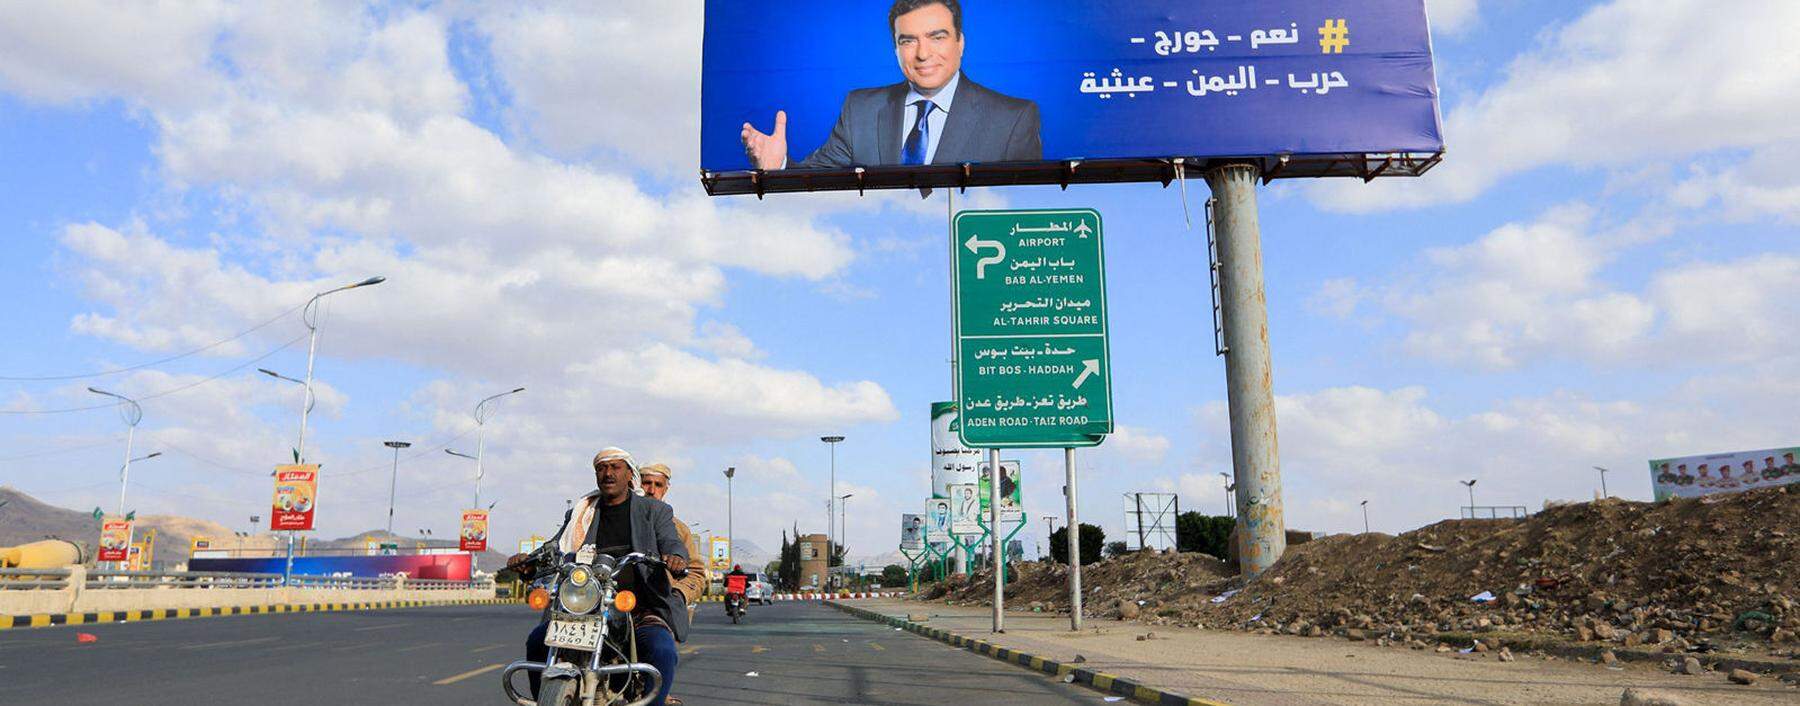 Der libanesische Informationsminister Kordahi auf einem Plakat in Jemens Hauptstadt Sanaa.